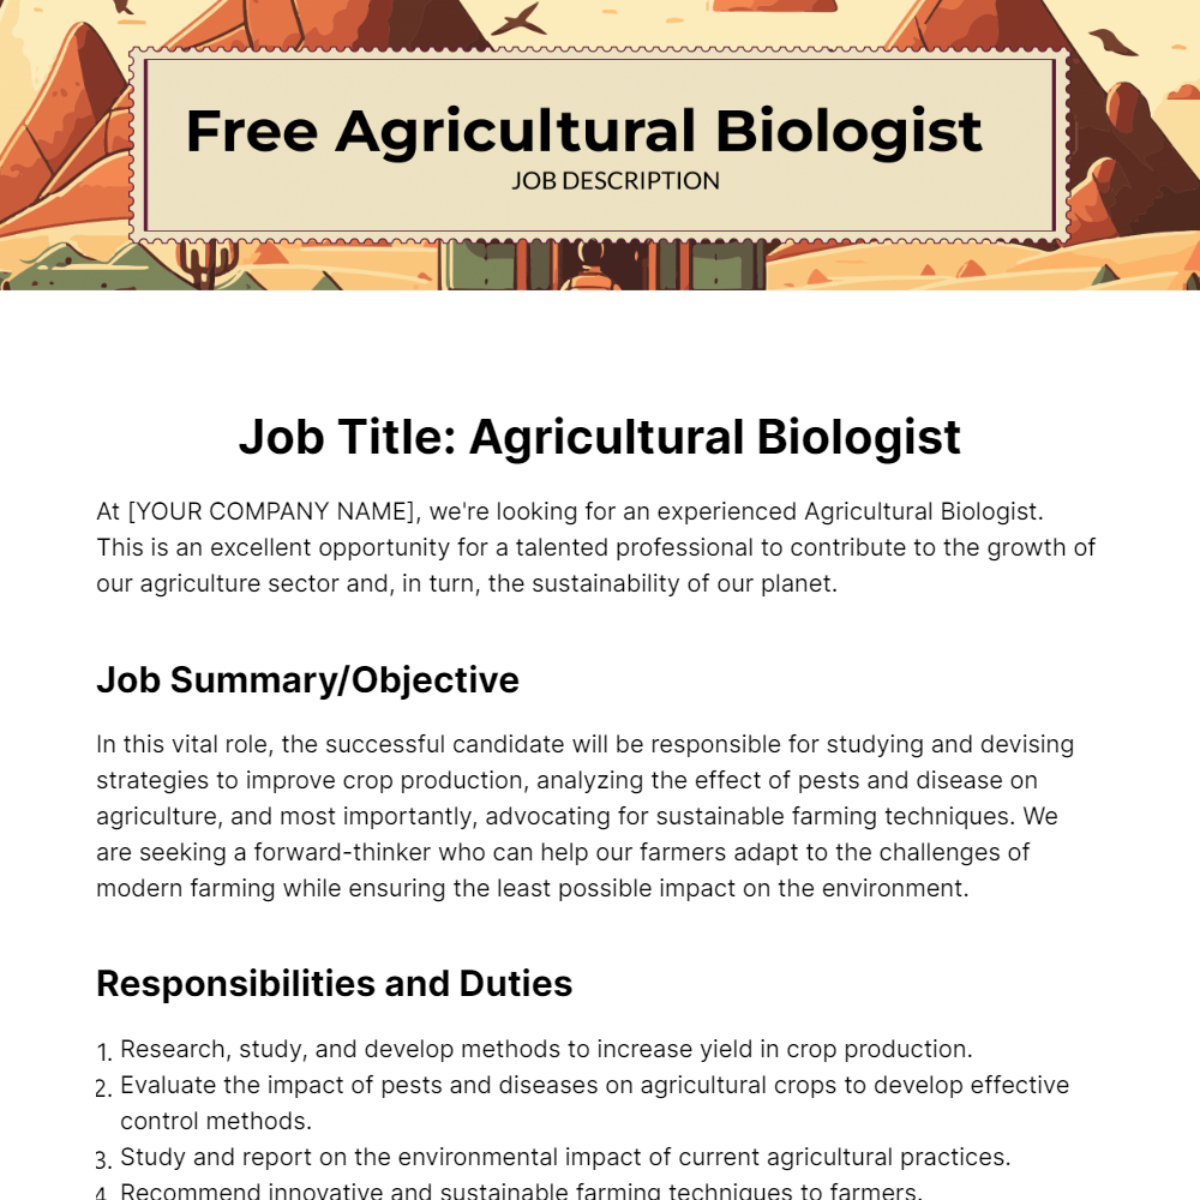 Agricultural Biologist Job Description Template